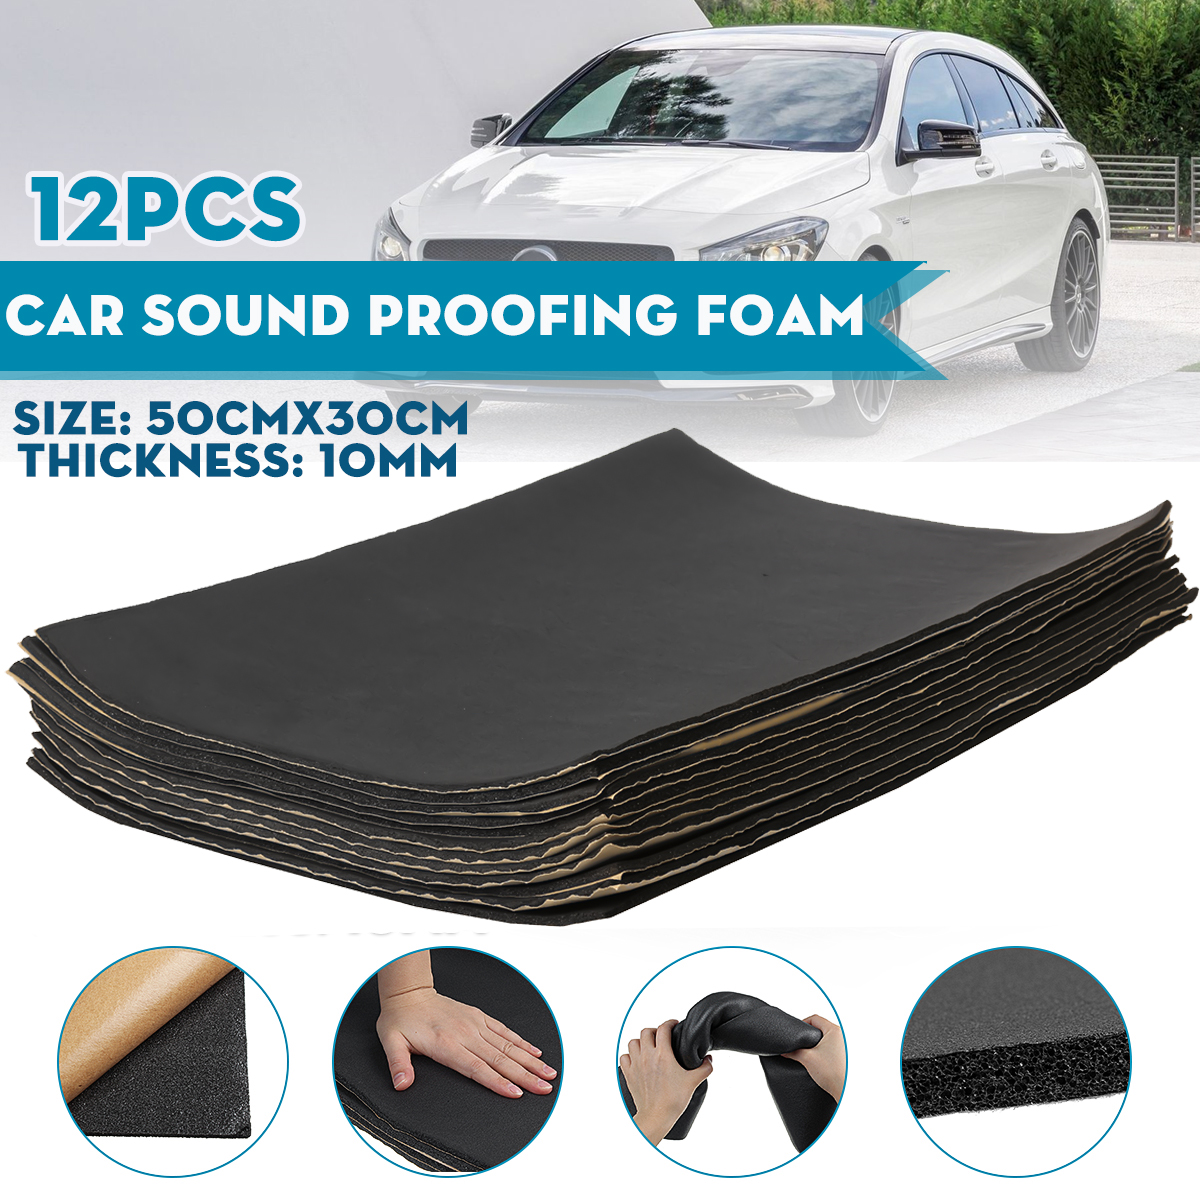 12Pcs-3mm-Sound-Proofing-Foam-Deadening-Insulation-Cotton-50x30cm-for-Car-SUV-1736475-2